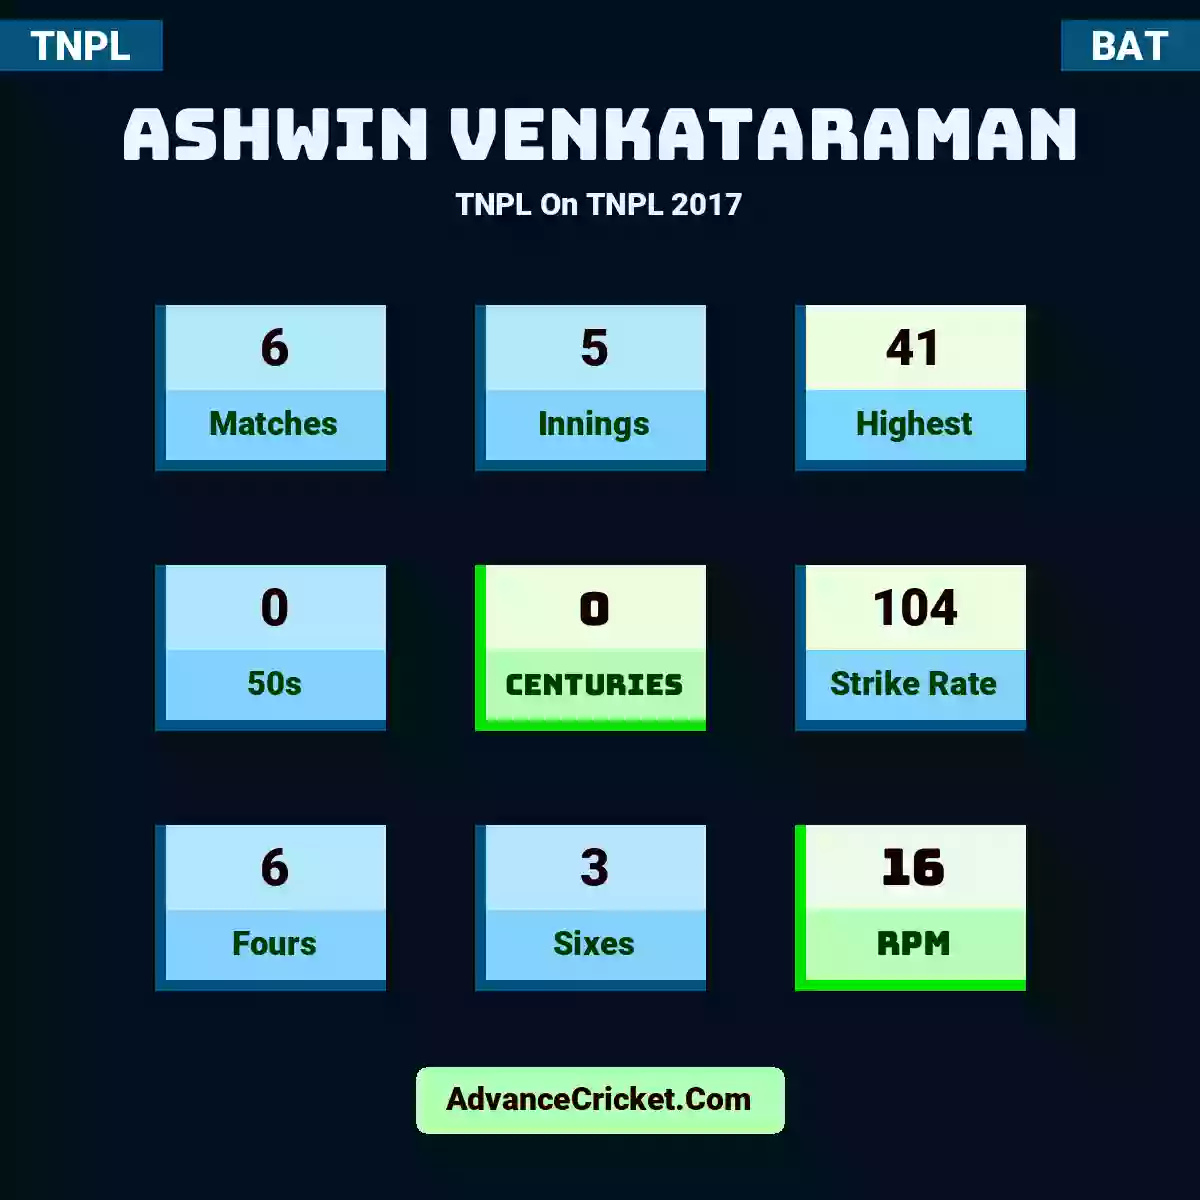 Ashwin Venkataraman TNPL  On TNPL 2017, Ashwin Venkataraman played 6 matches, scored 41 runs as highest, 0 half-centuries, and 0 centuries, with a strike rate of 104. A.Venkataraman hit 6 fours and 3 sixes, with an RPM of 16.